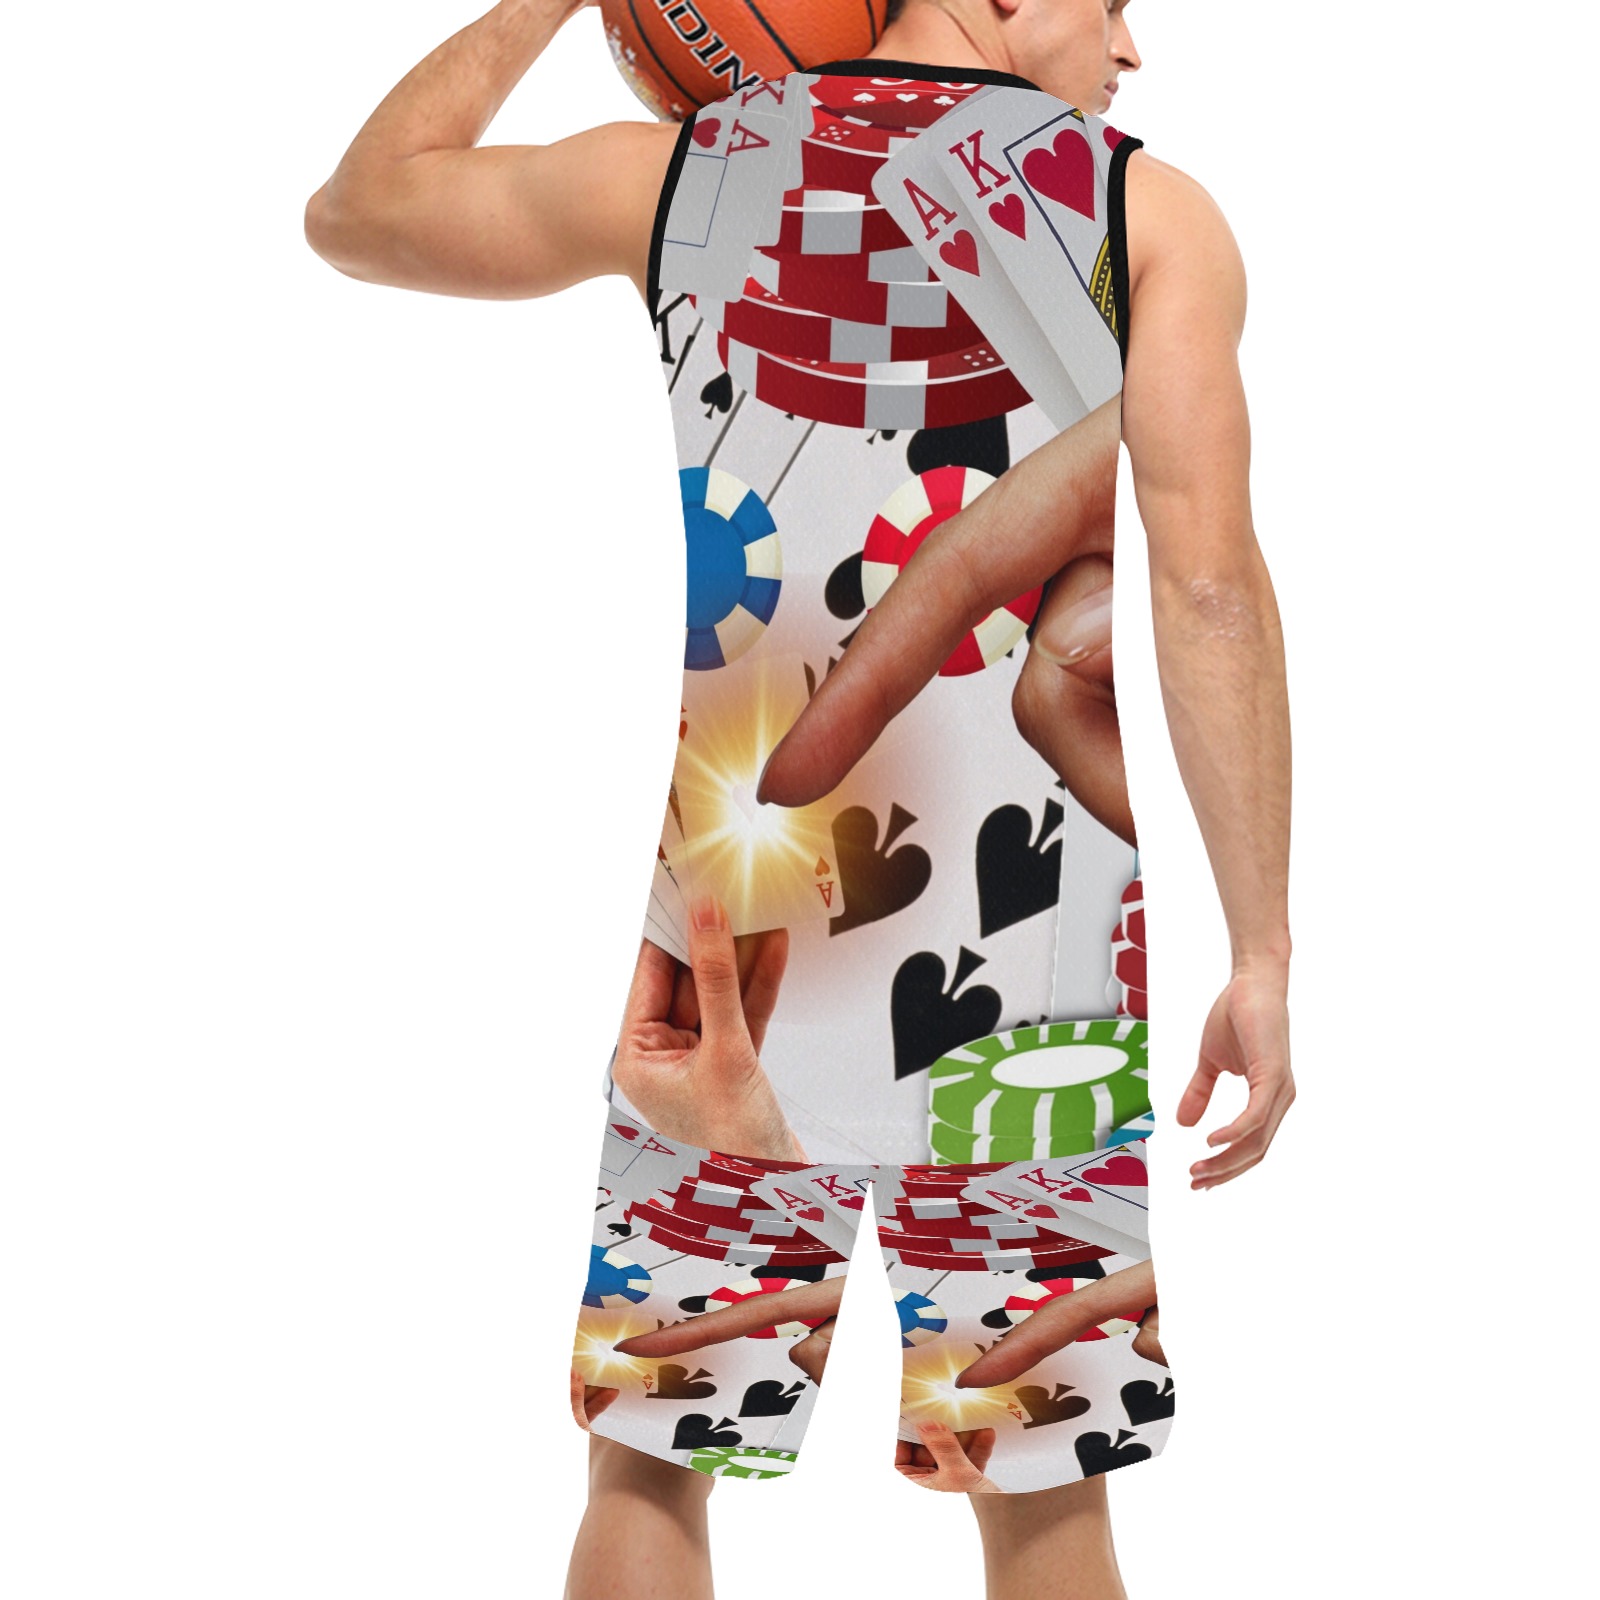 New Basketball Uniform with Pocket